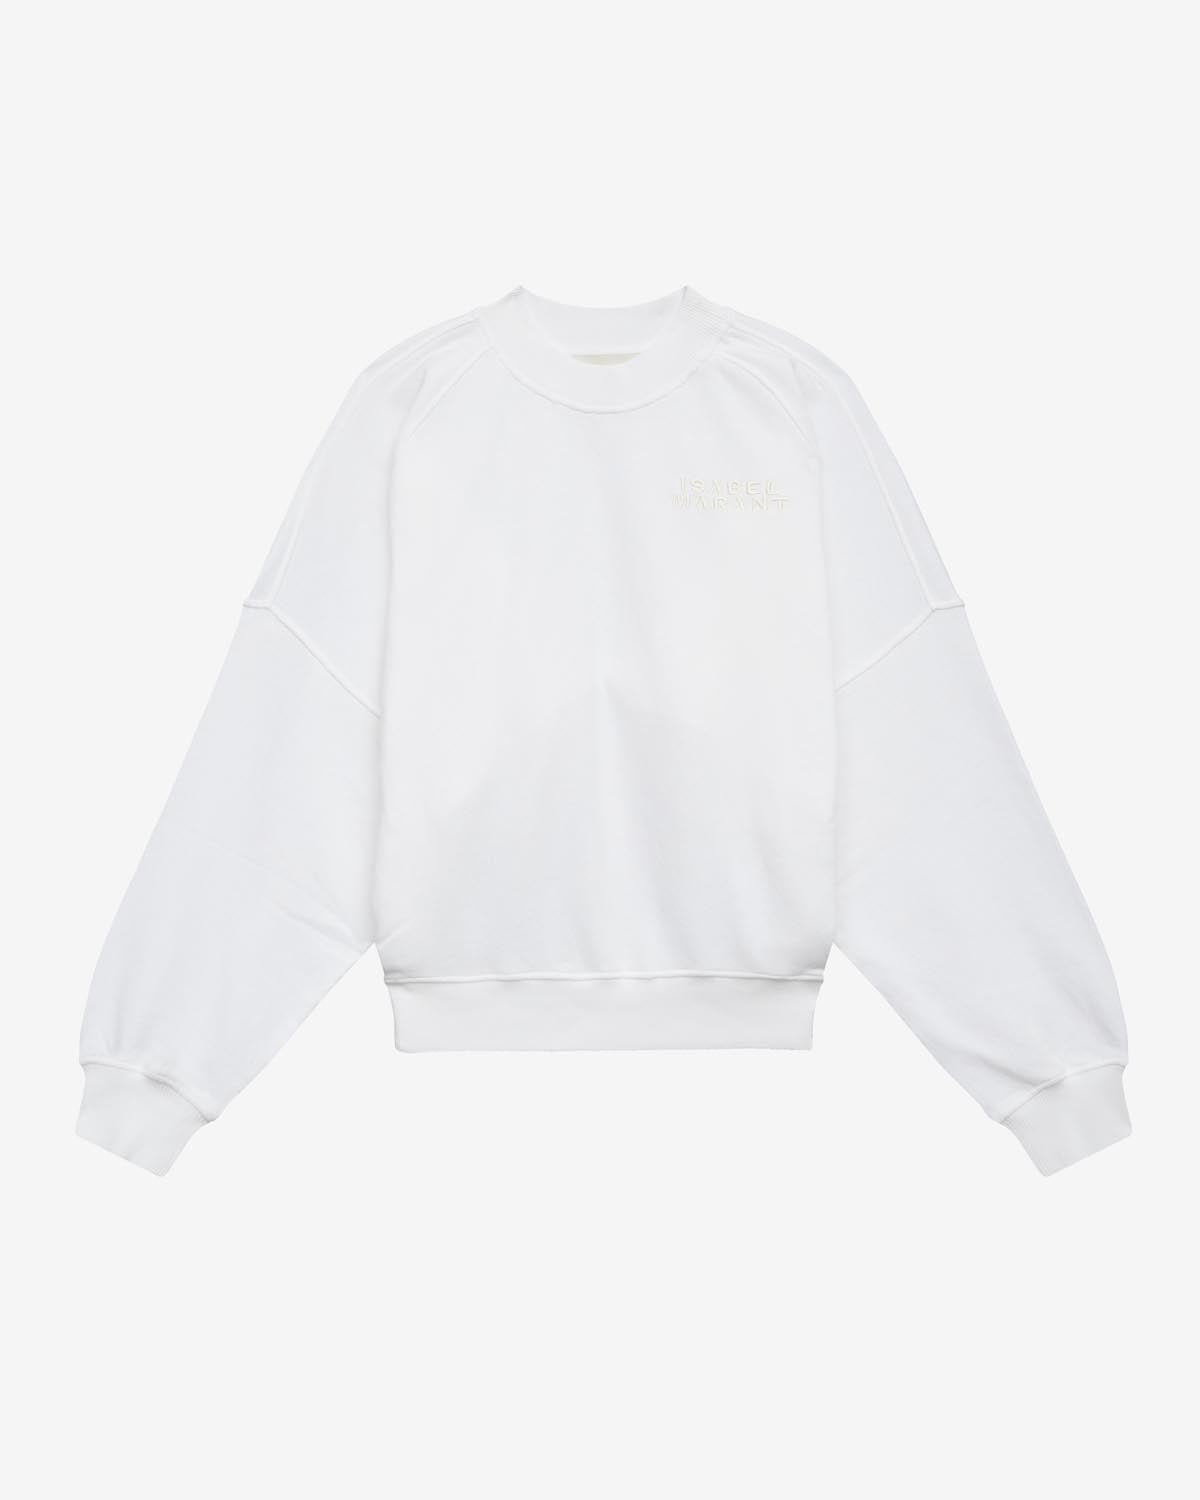 Shanice sweatshirt Woman Bianco 1